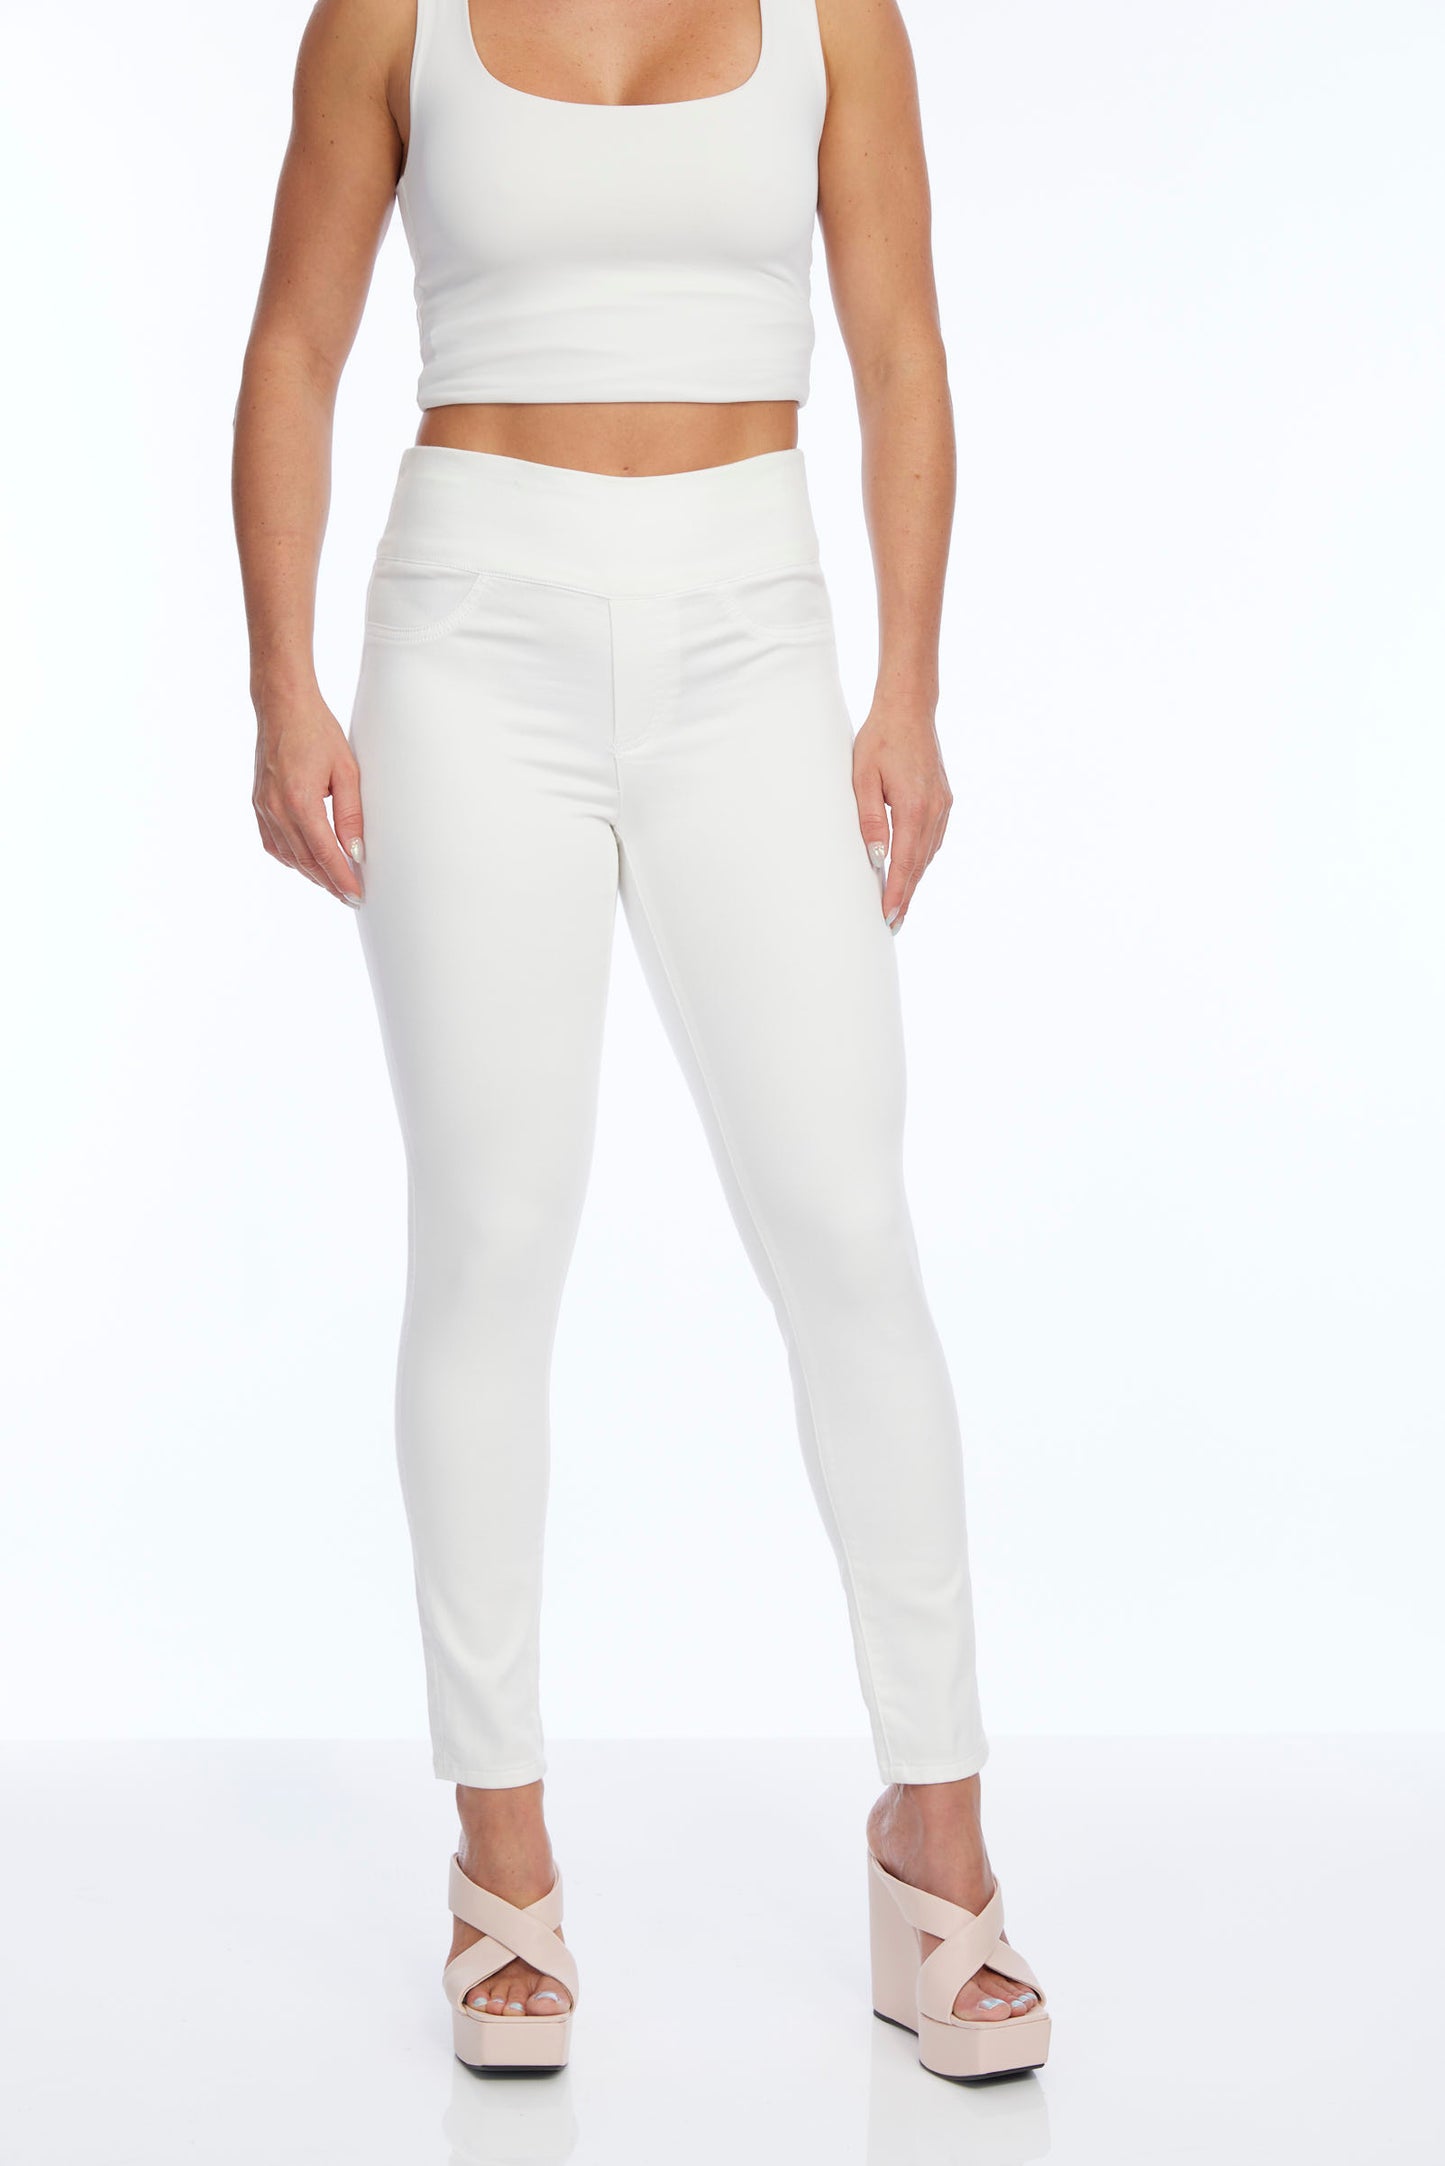 Women's Stretchy White Skinny Jeans LIOR | Jane